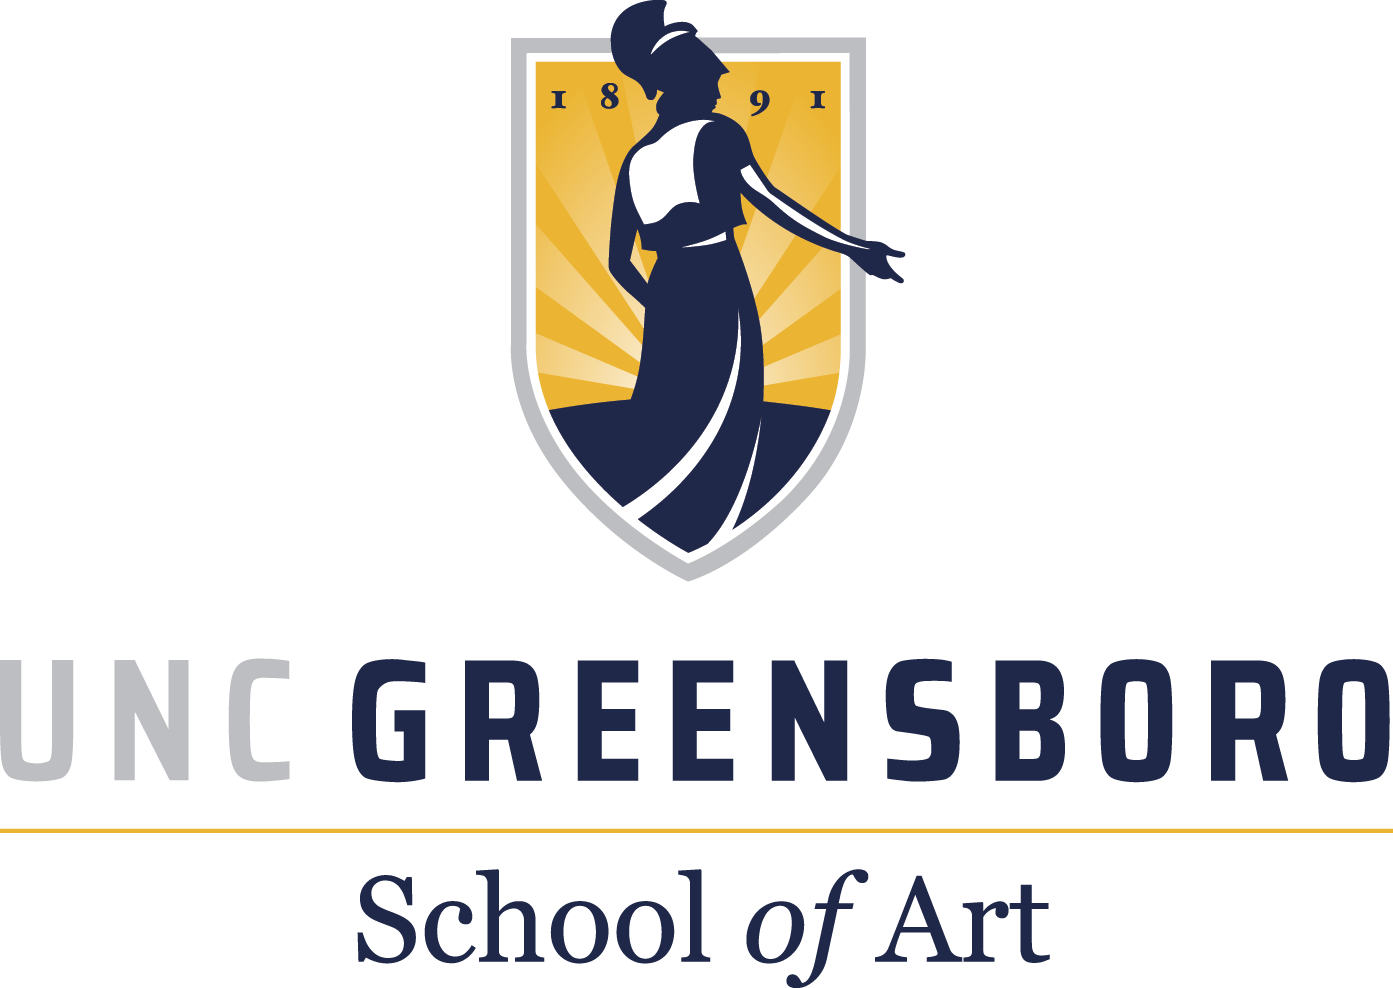 School of Art Logo